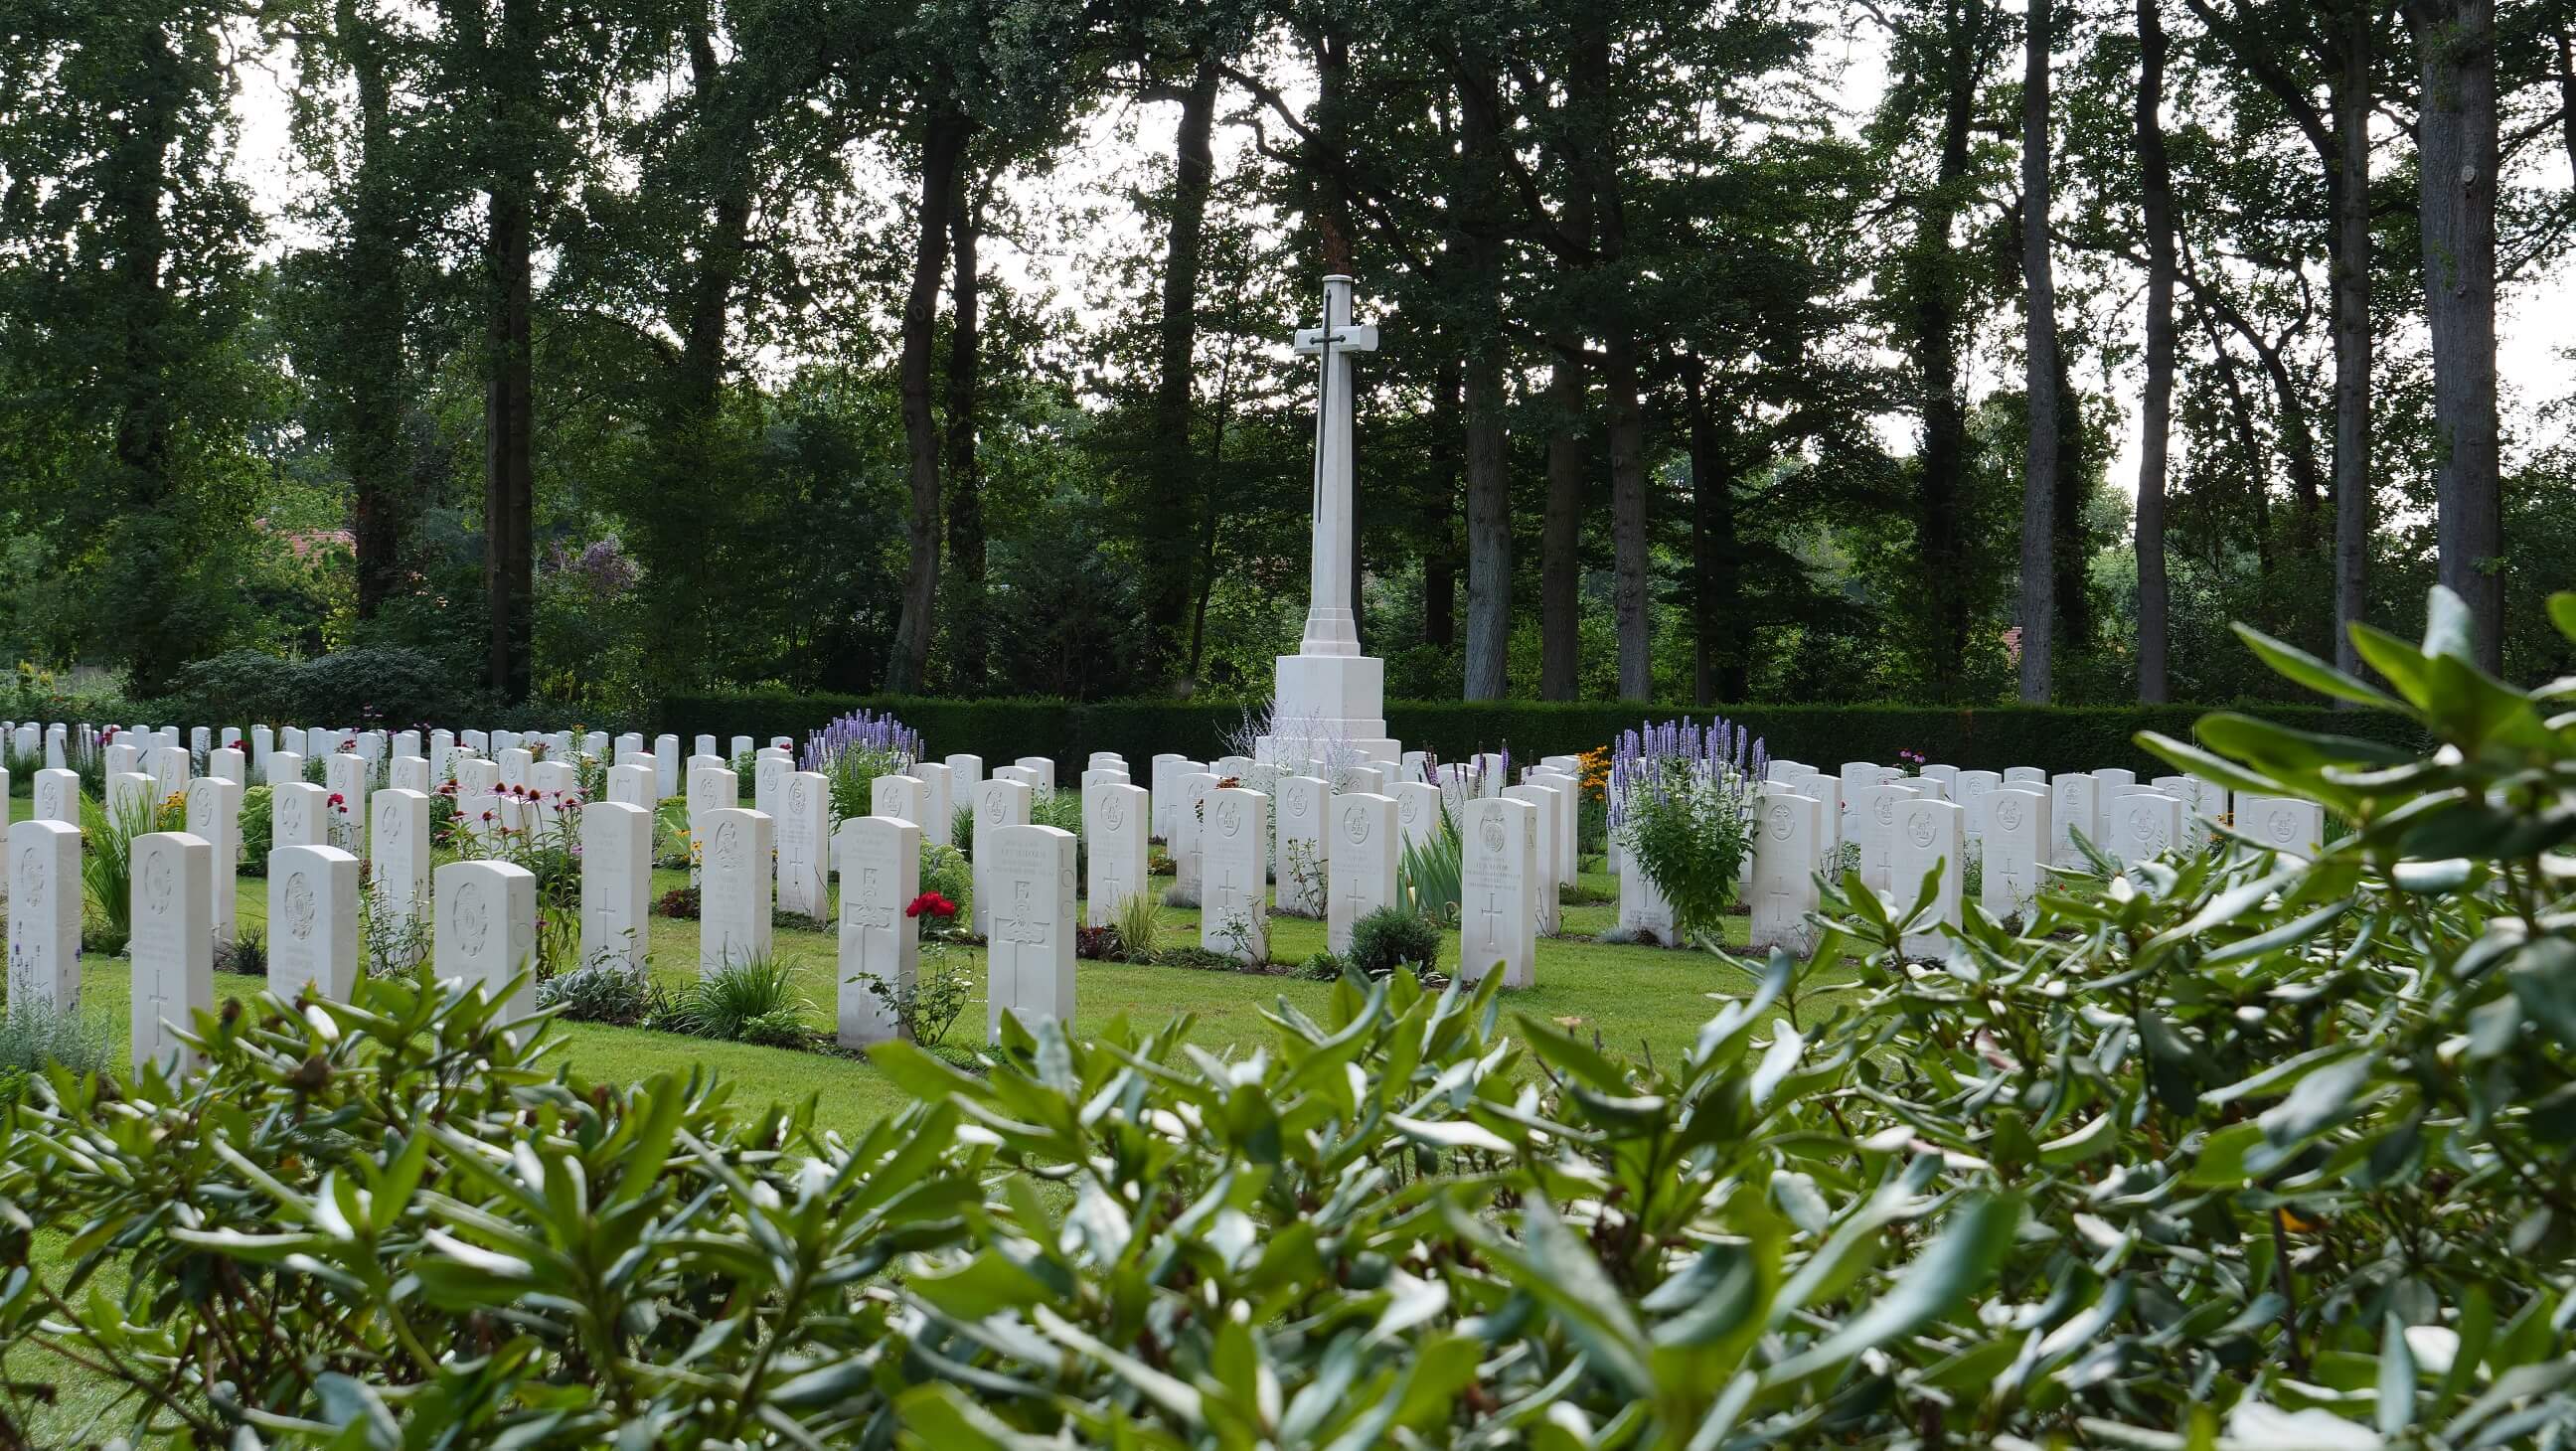 Headstones and cross of sacrifice in Arnhem Oosterbeek War Cemetery, The Netherlands 